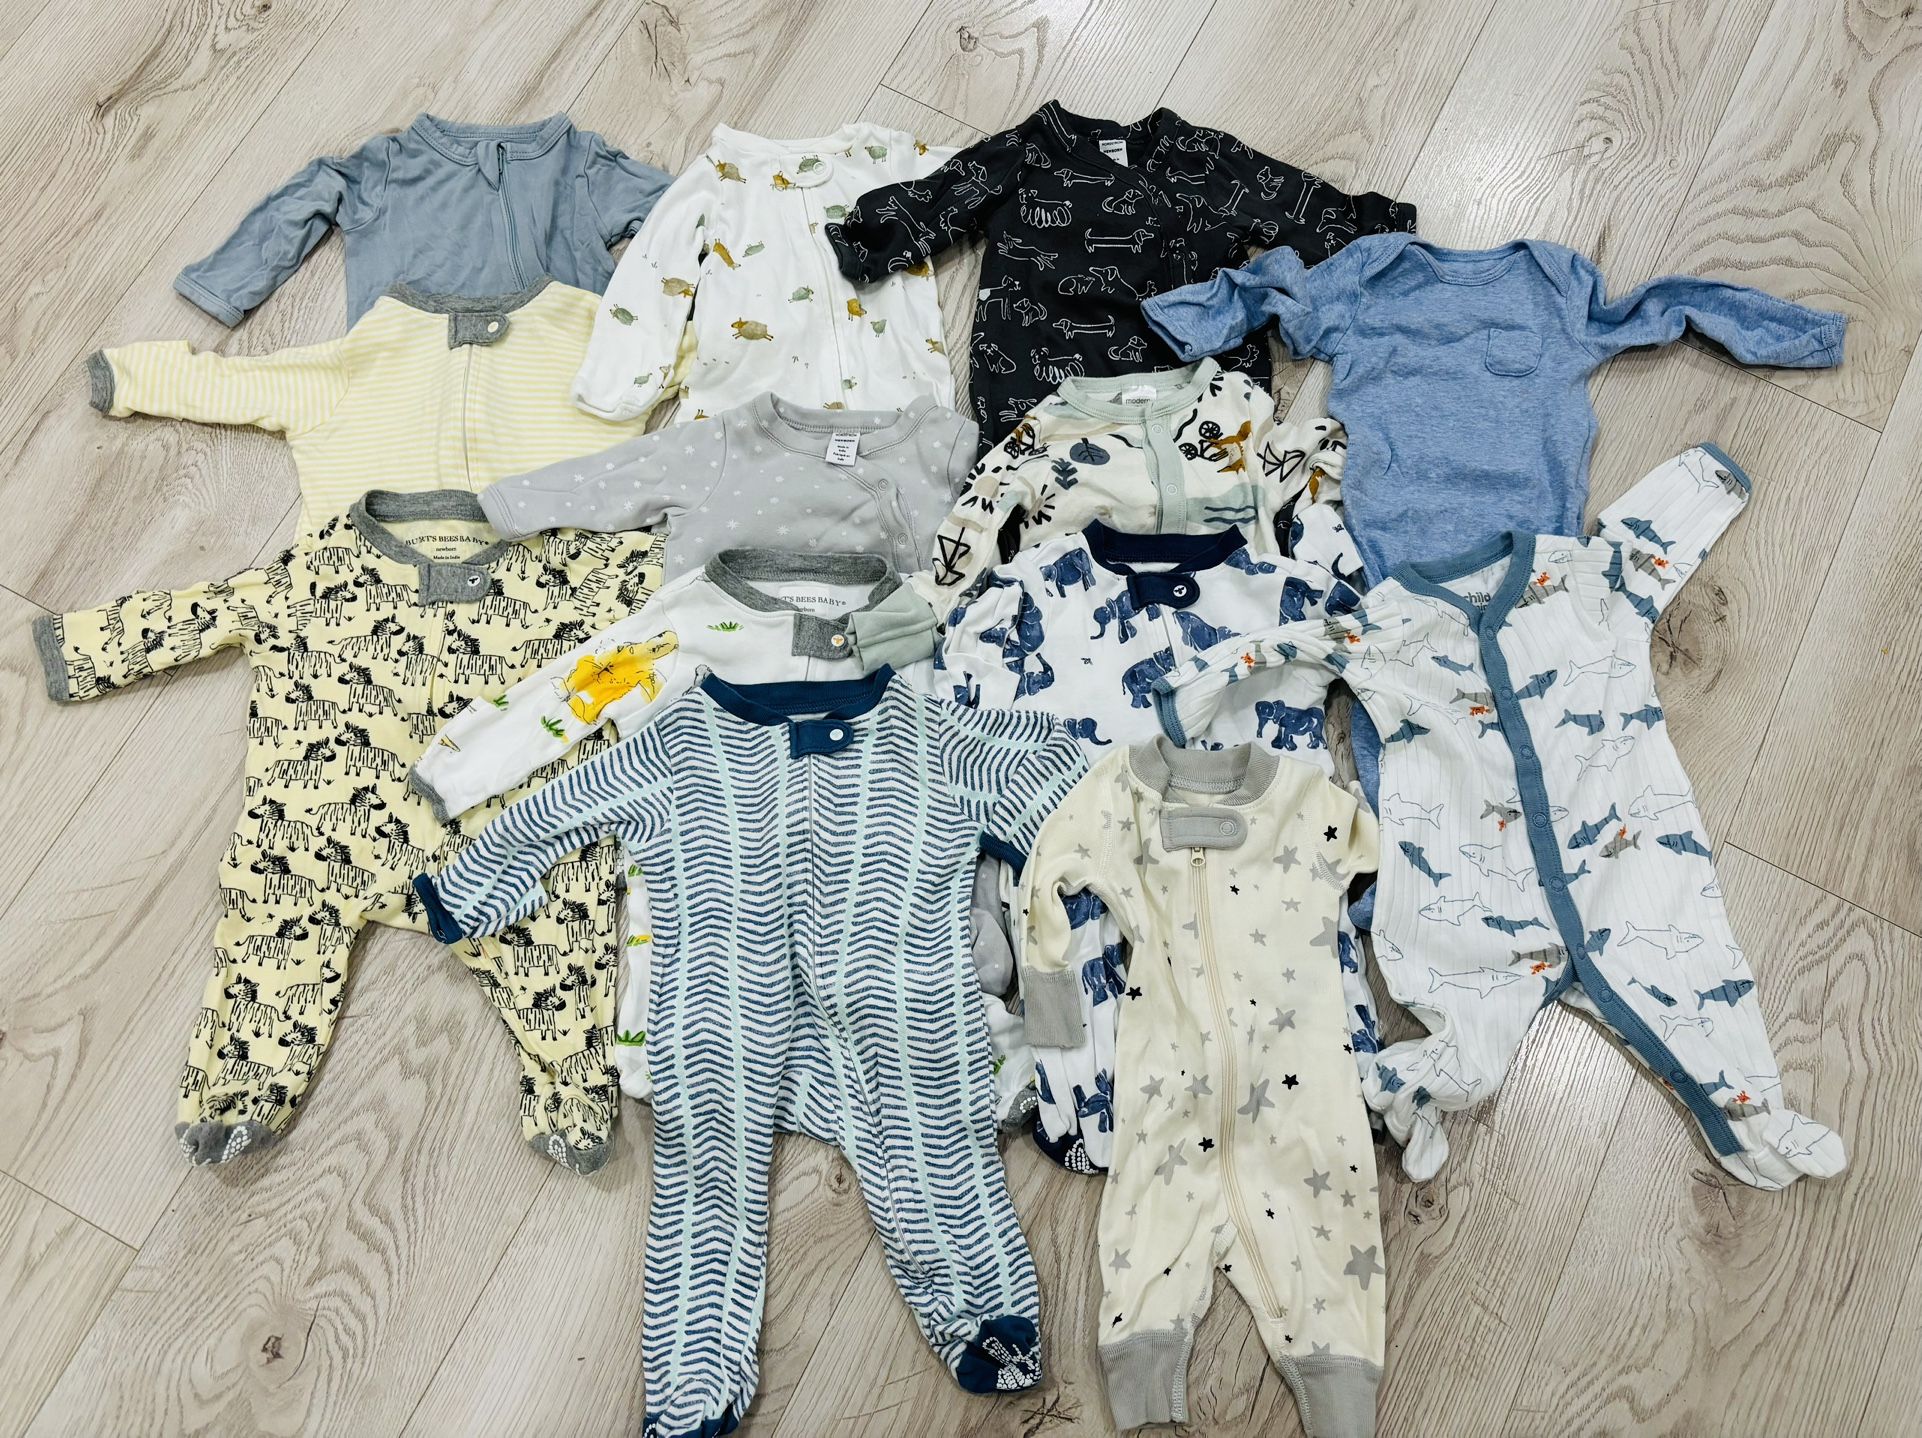 Newborn Organic Baby Clothes